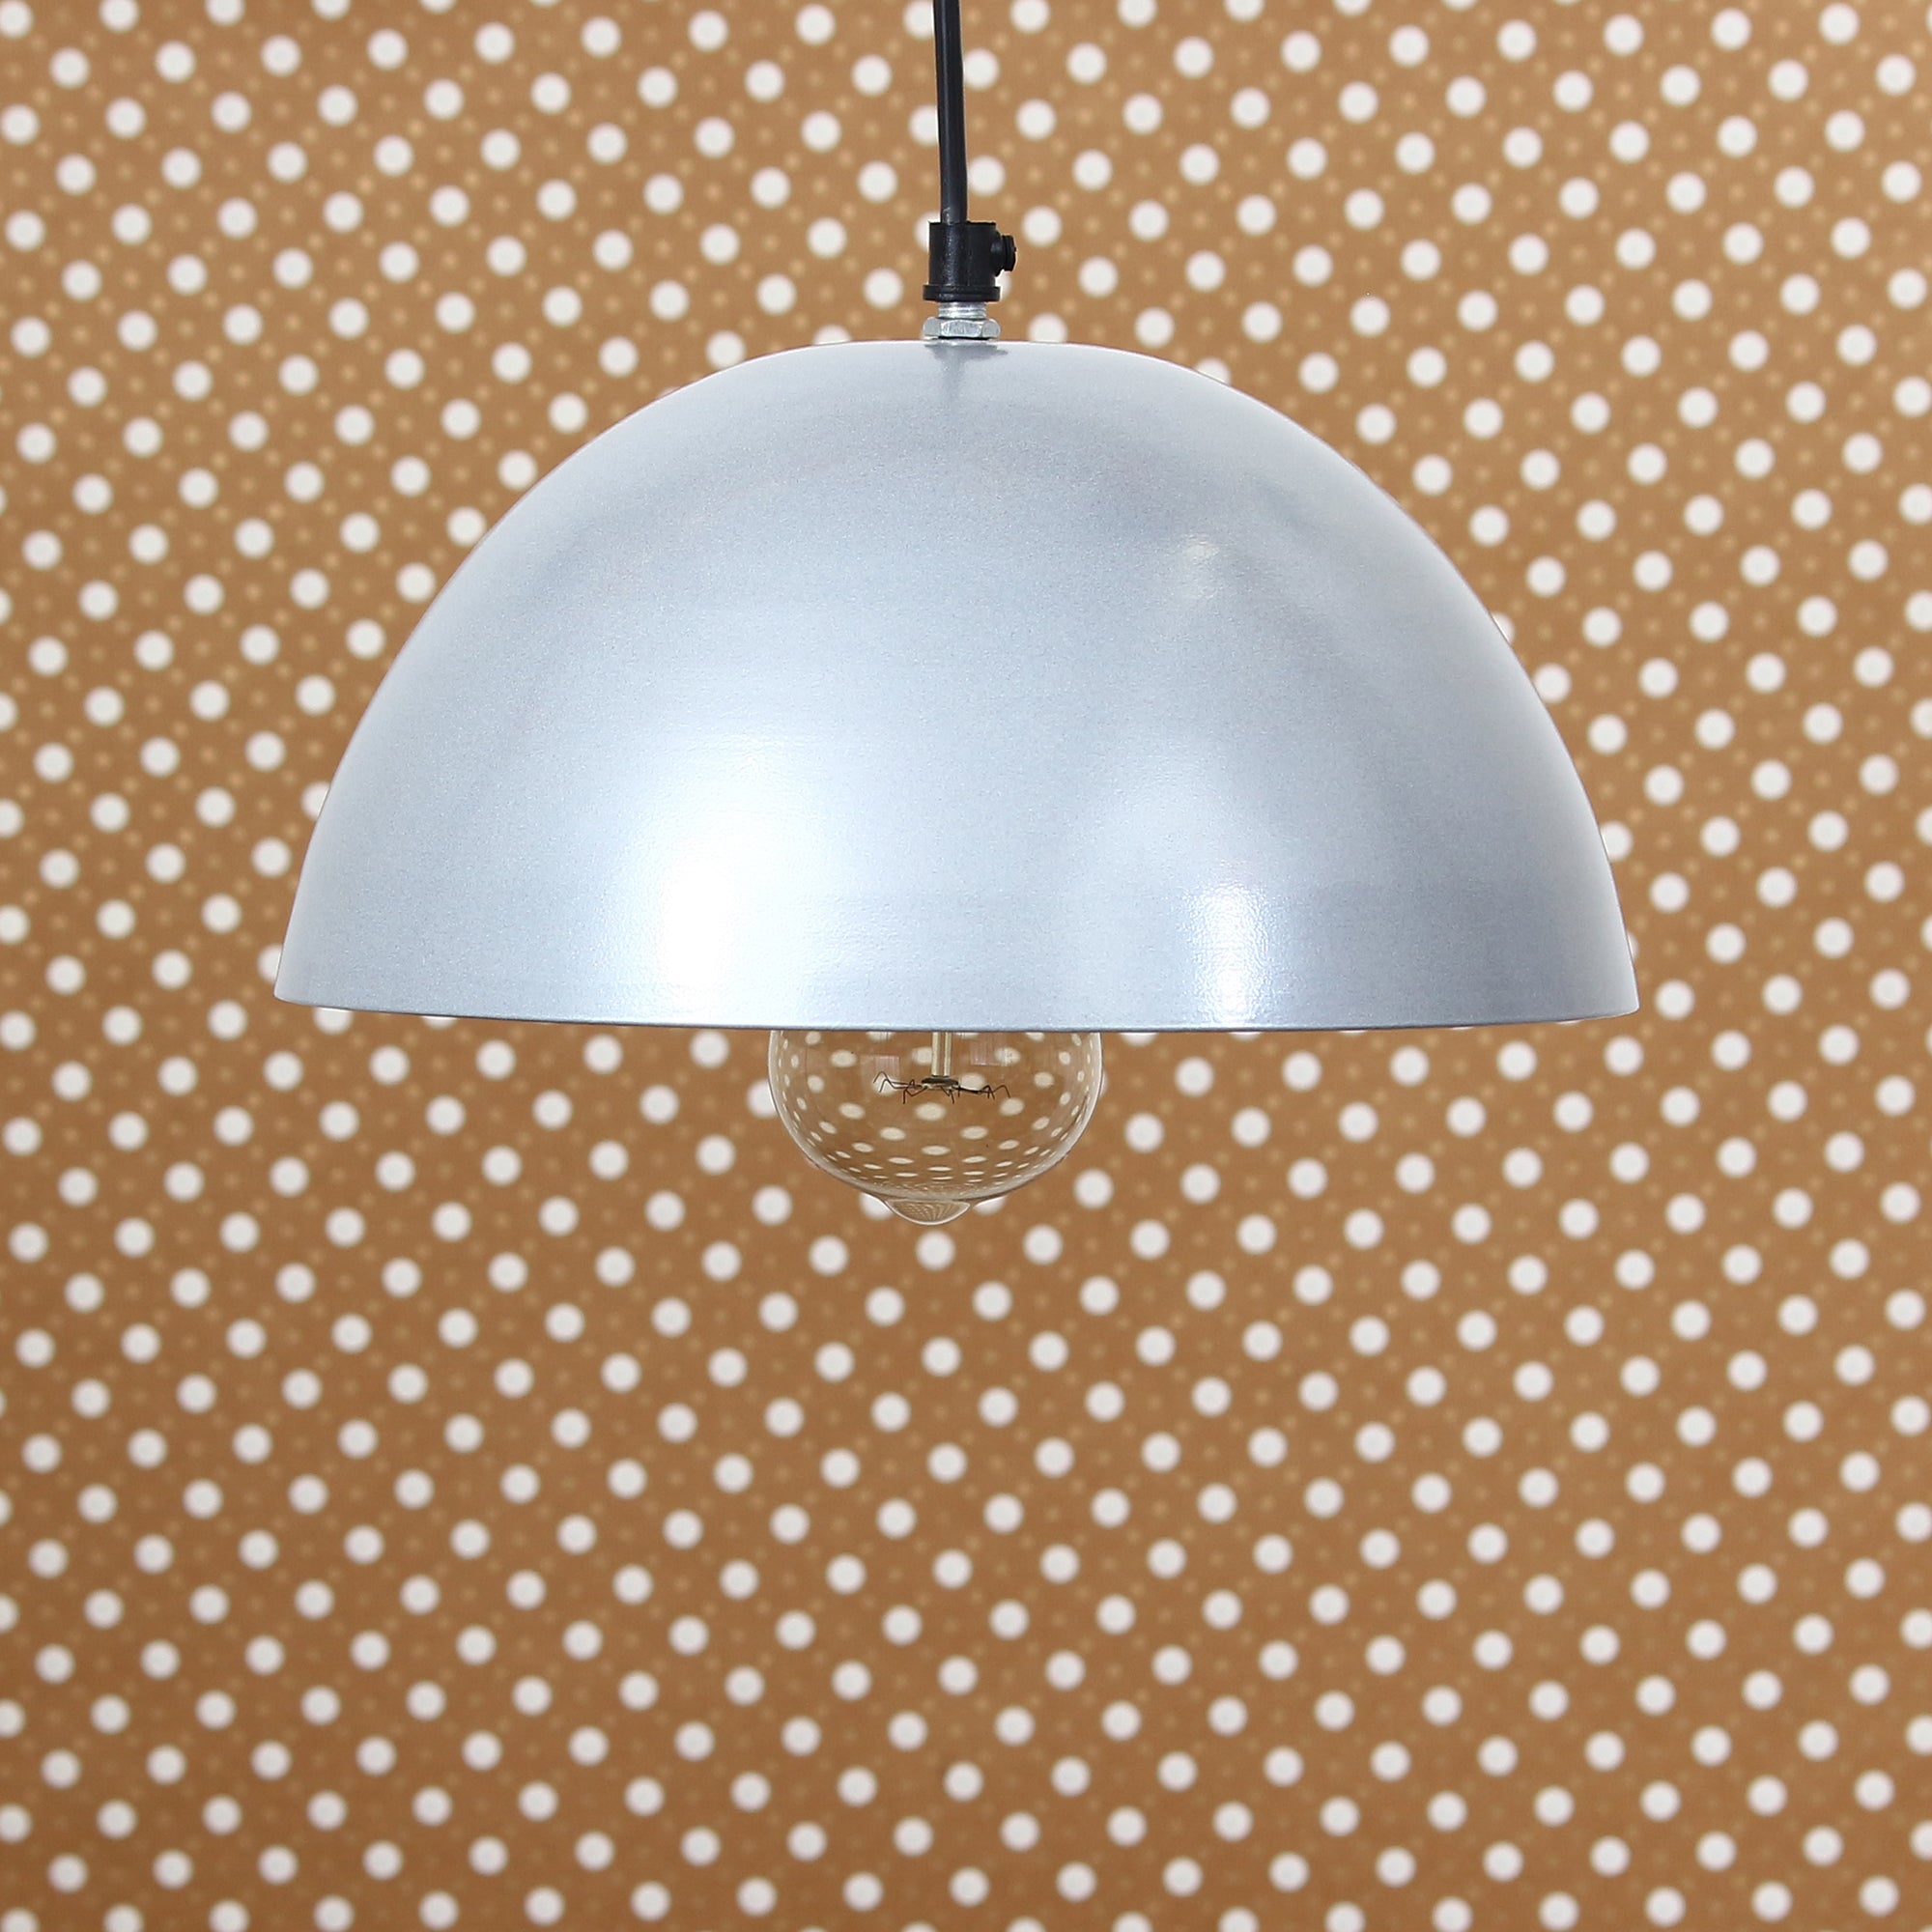 Shining Silver Glossy Finish Pendant Light, 10" Diameter Ceiling Hanging Lamp for Home/Living Room/Offices/Restaurants